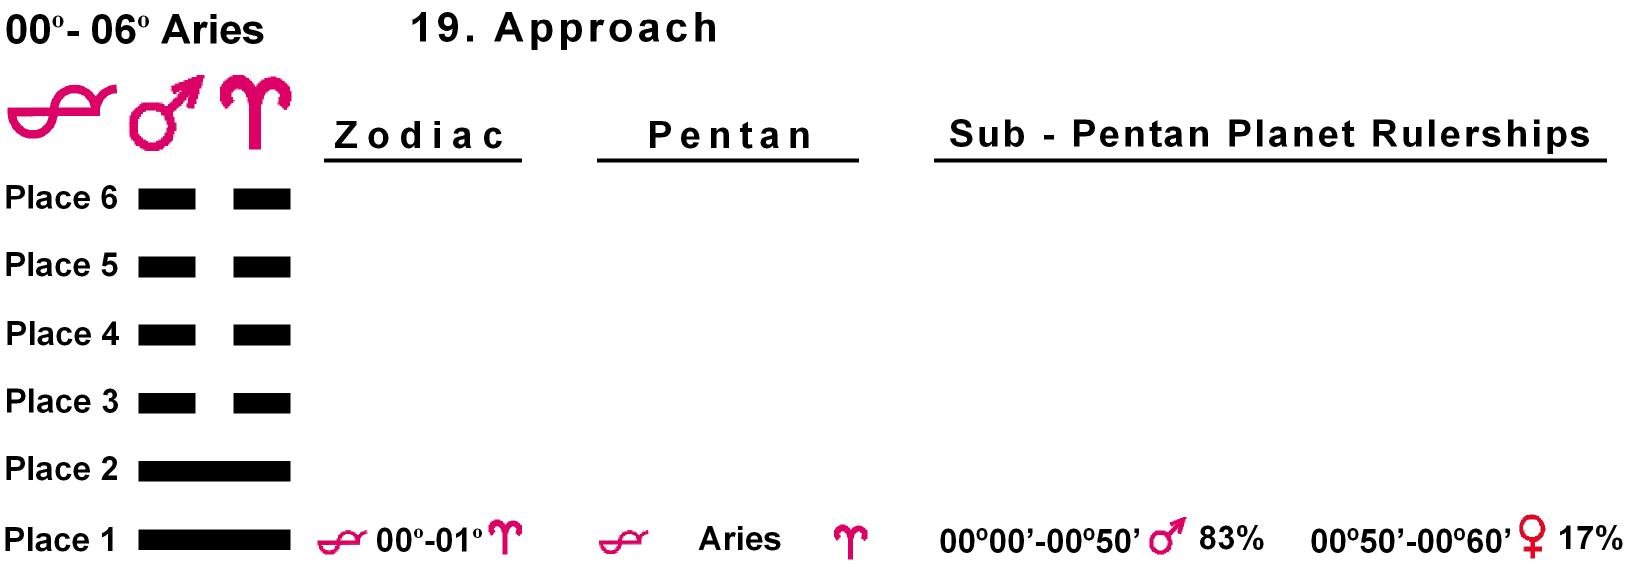 Pent-lines-01AR 00-01 Hx-19 Approach